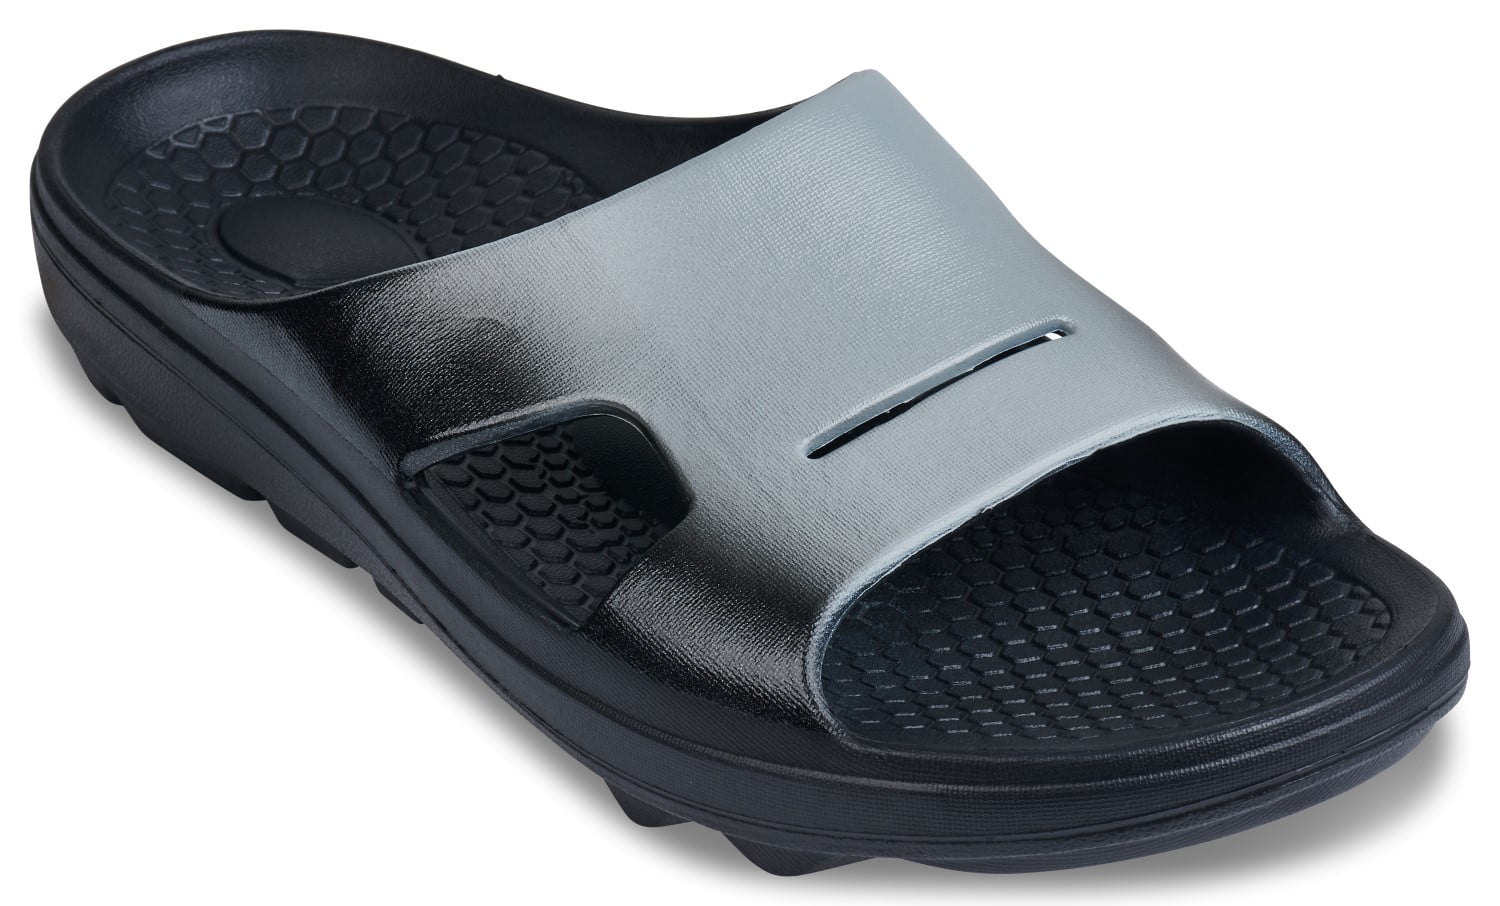 Spenco Fusion 2.0 Men's Soft Foam Recovery Thong Sandals Black ALLSizes